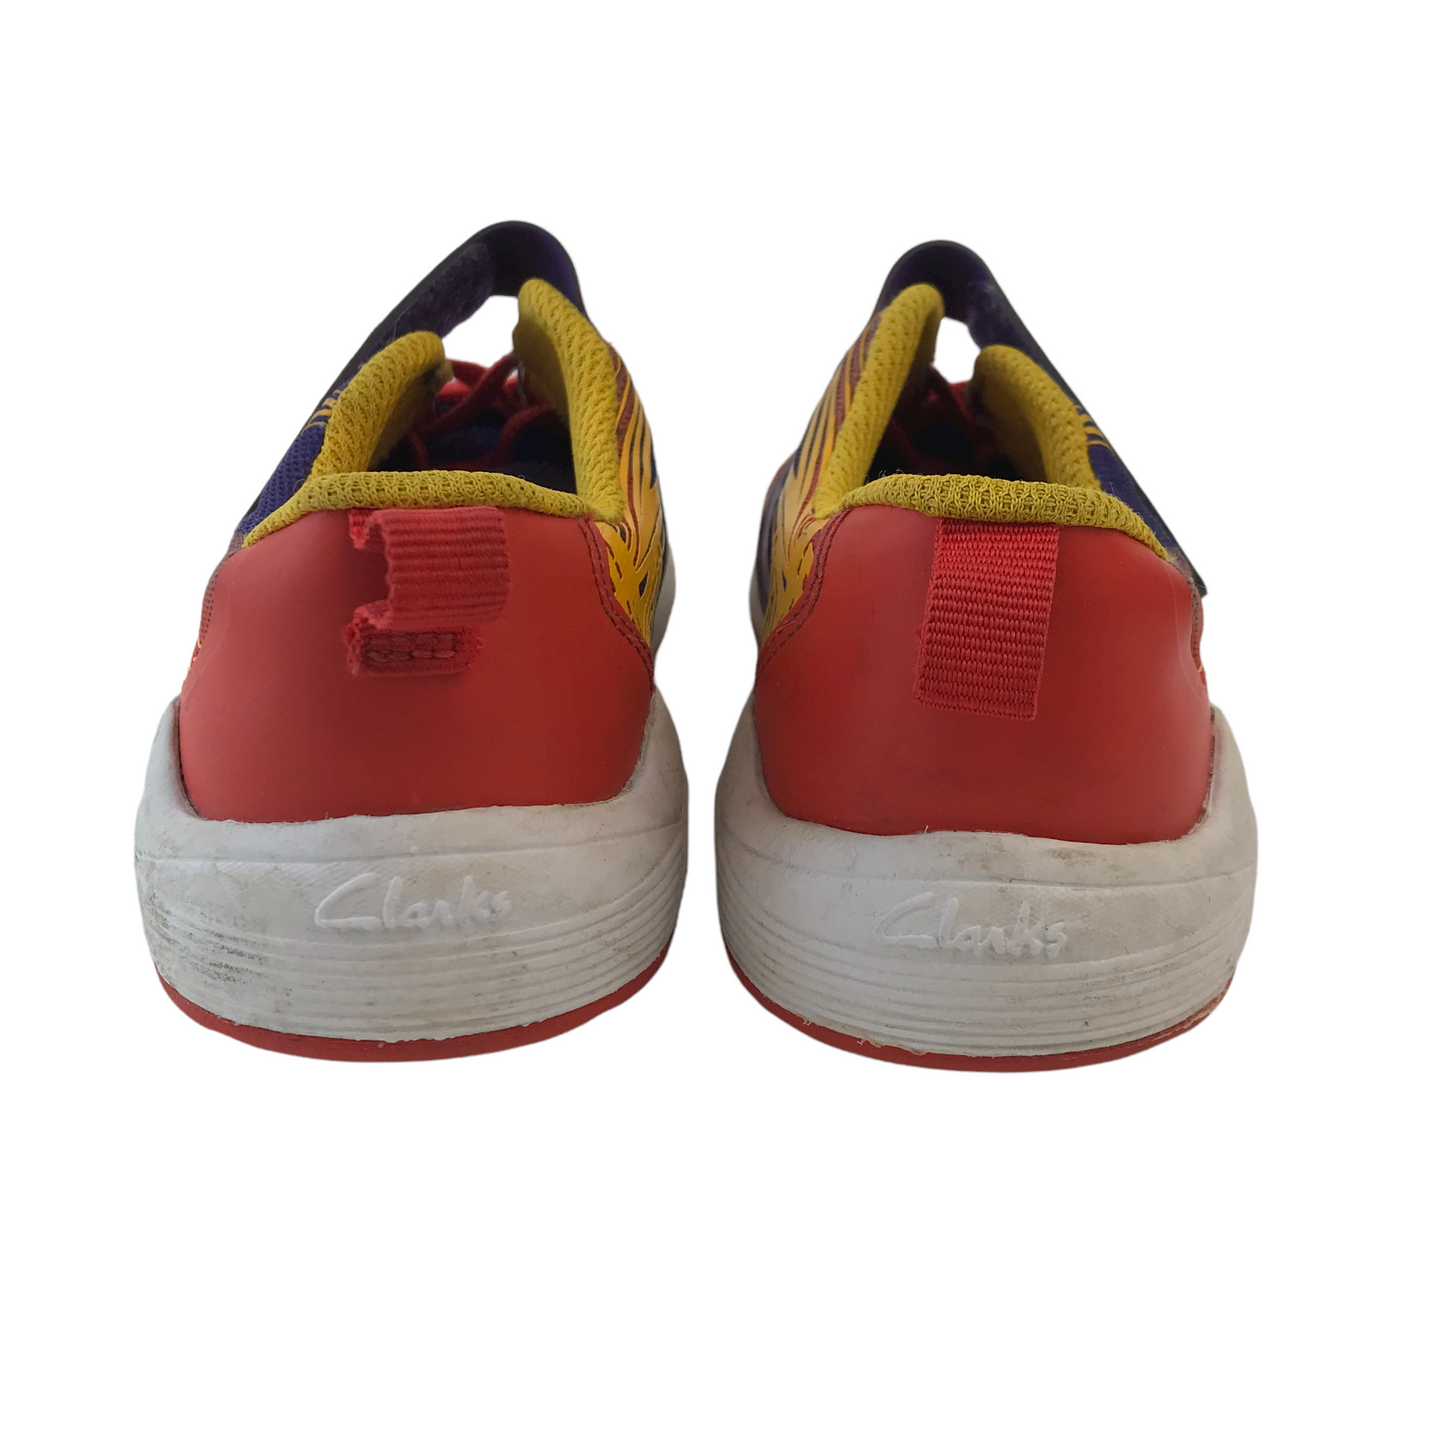 Clarks Multicoloured Trainers Shoe Size 11F (jr)